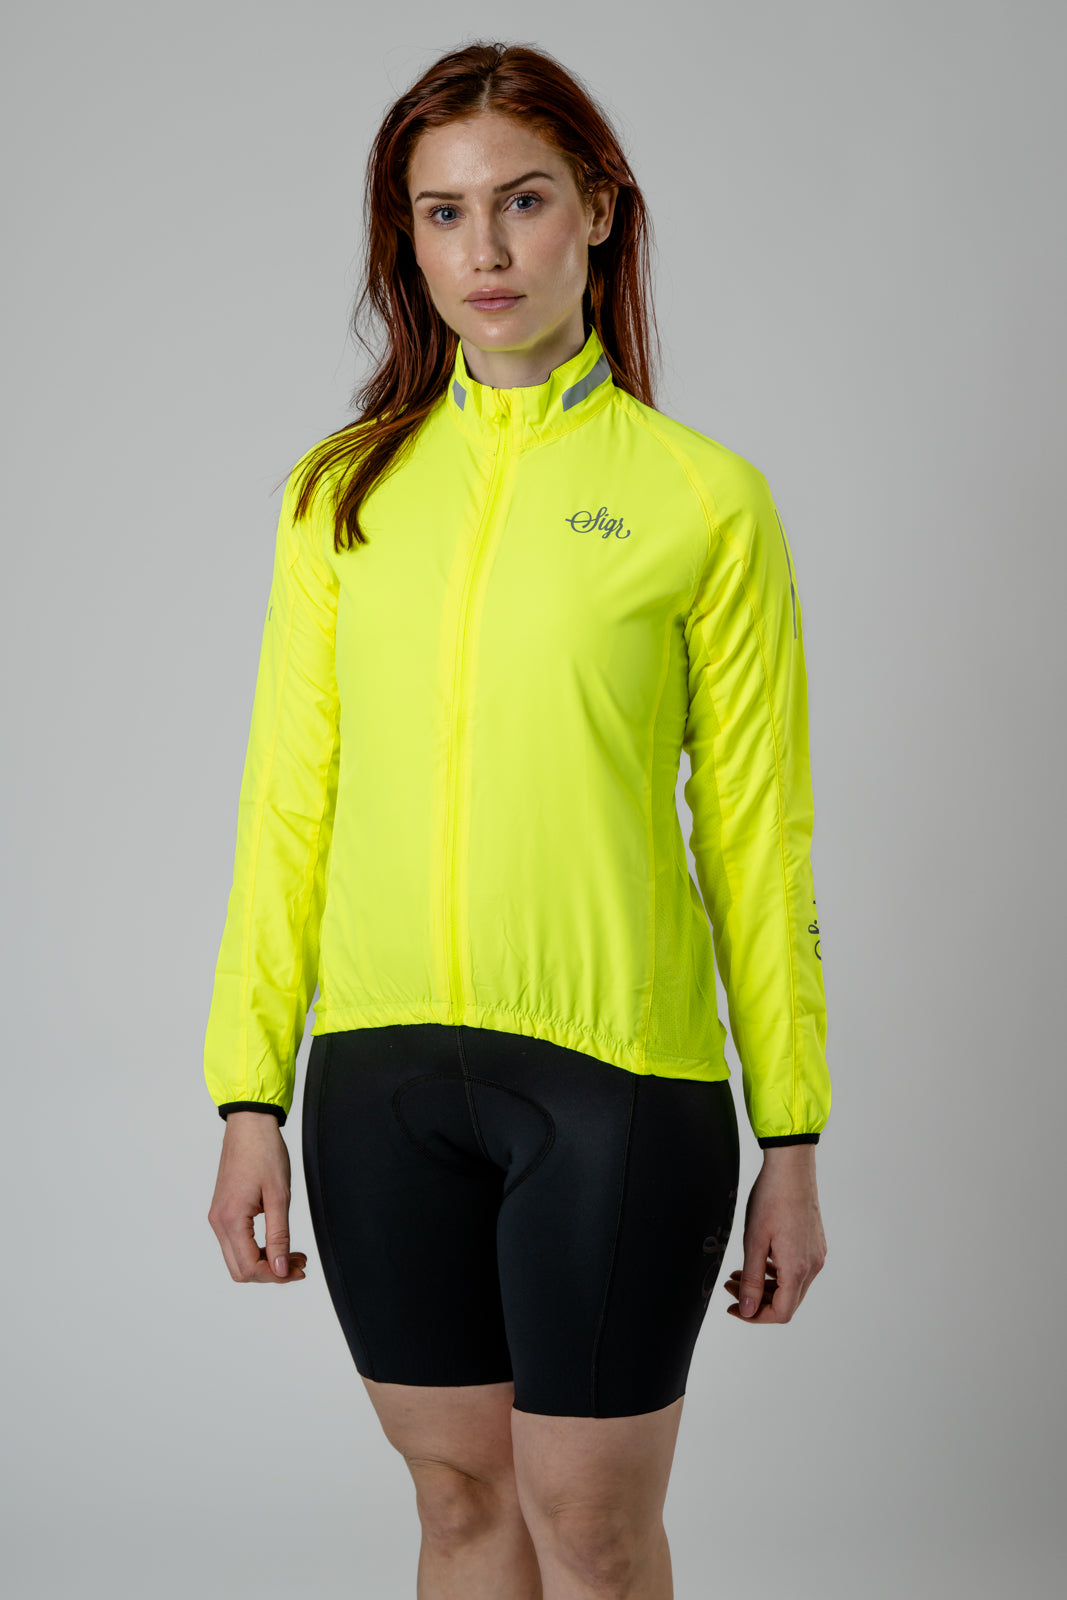 Treriksroset Yellow - Road Cycling Pack Jacket for Women